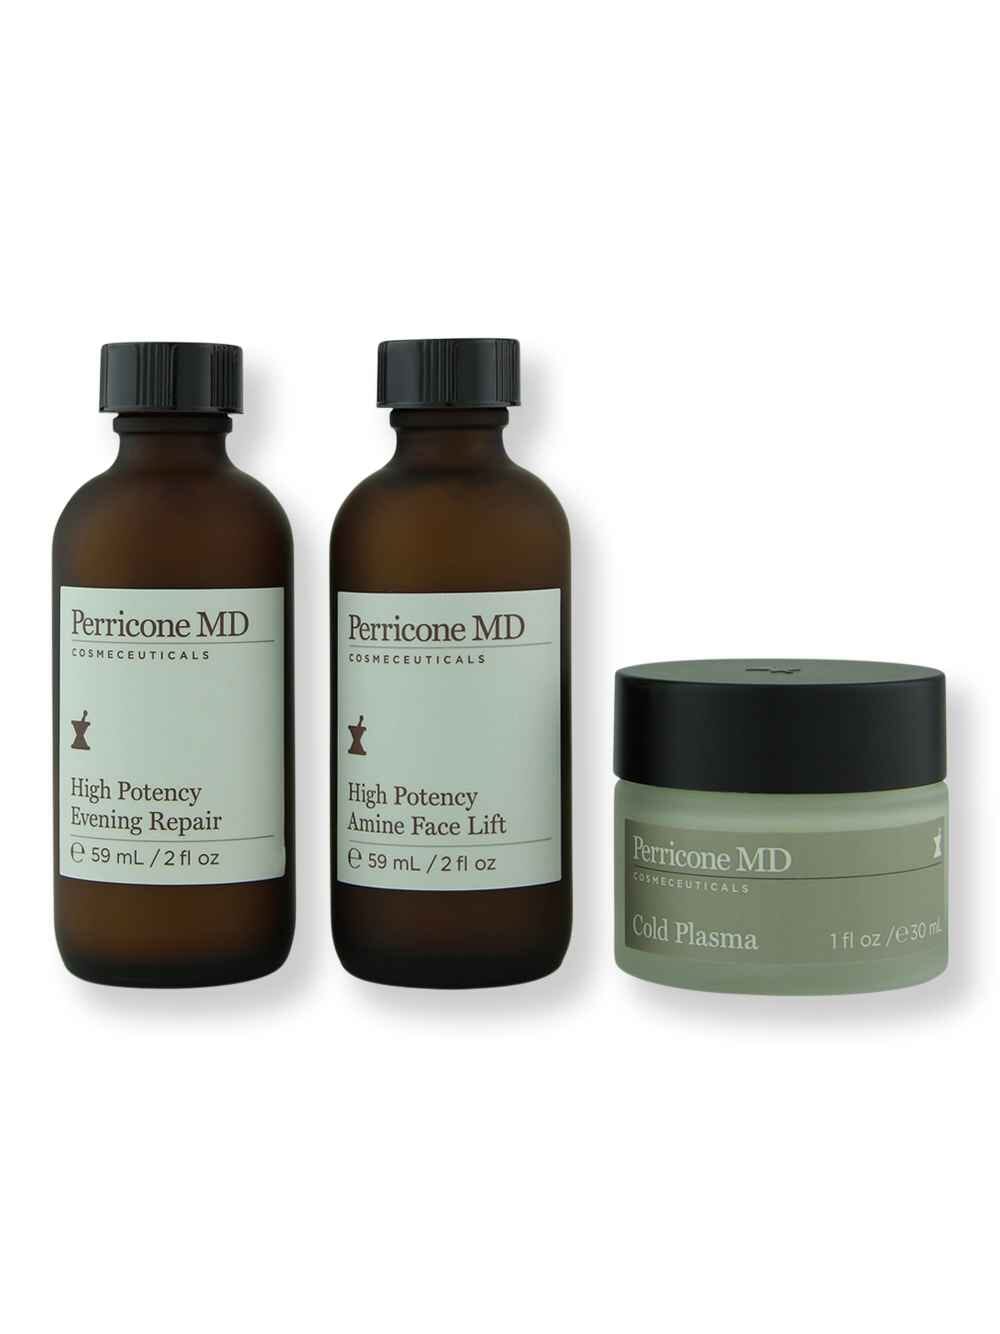 Perricone MD Perricone MD Evening Repair & Amine Face Lift 2oz + Cold Plasma 1oz Skin Care Kits 